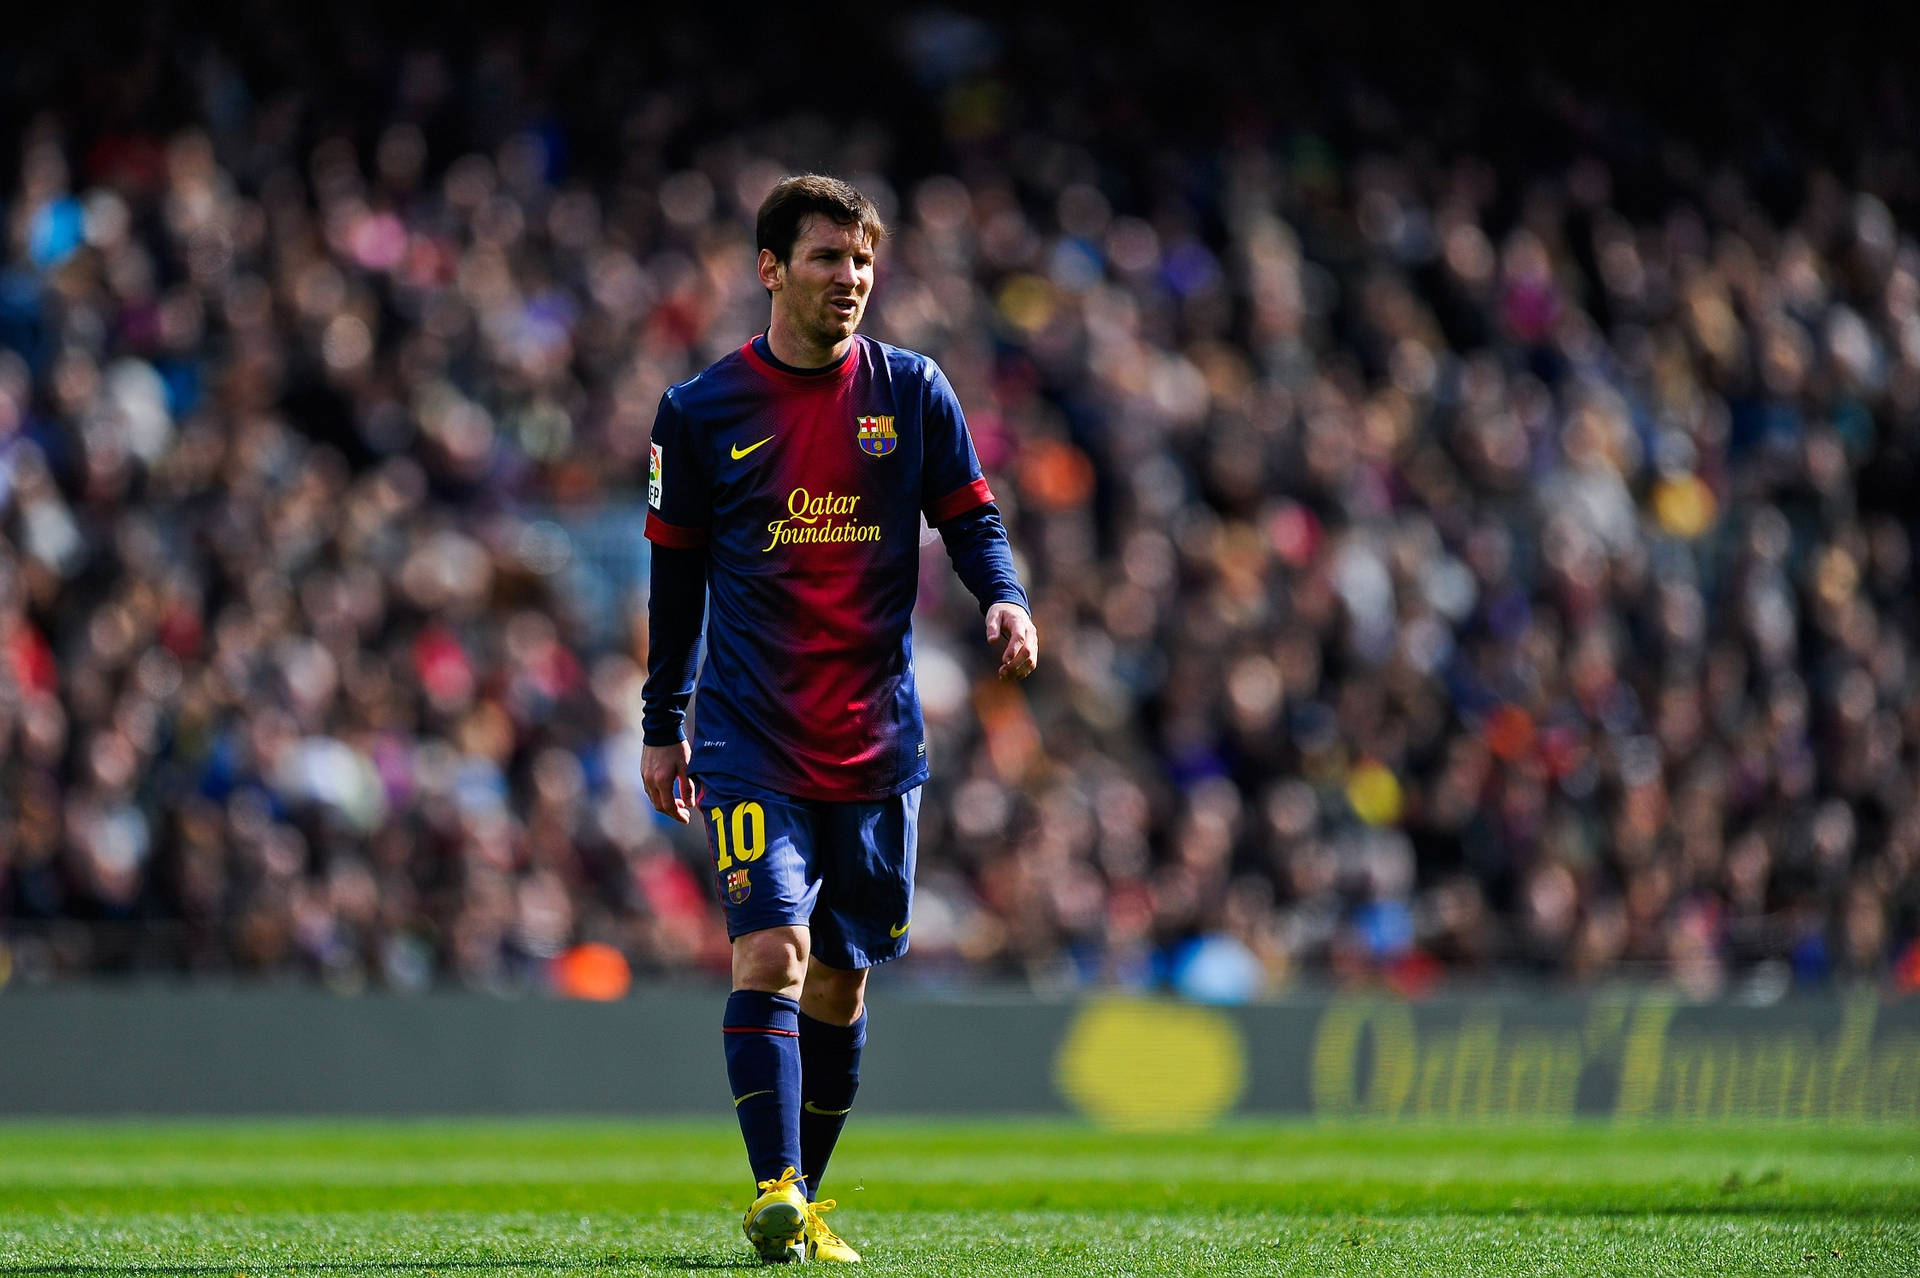 Massive Crowd Lionel Messi Background